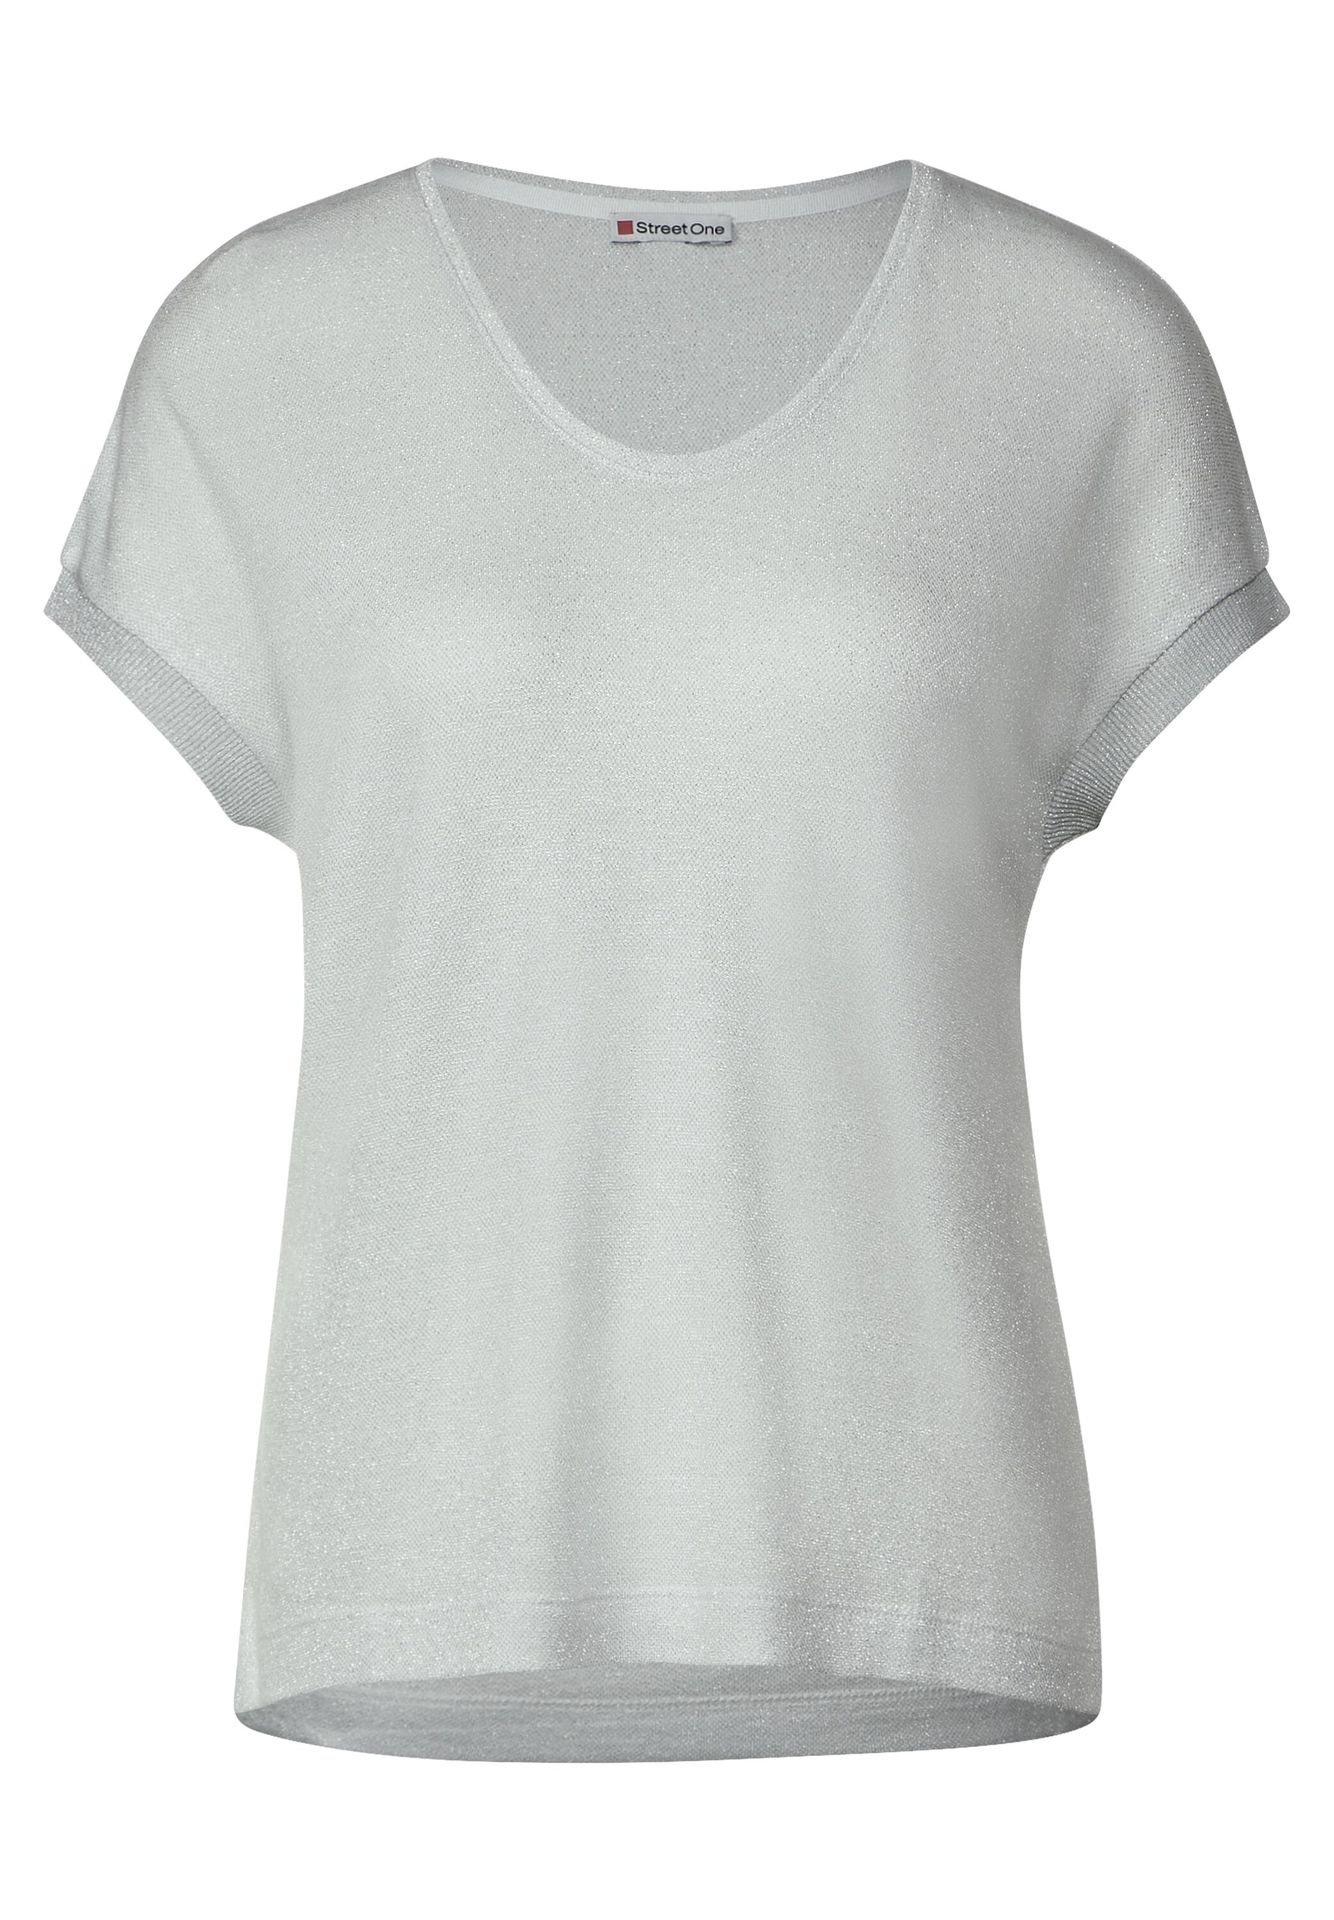 Street-One LTD QR v-neck shiny shirt off white 00107570-L0019000200000506